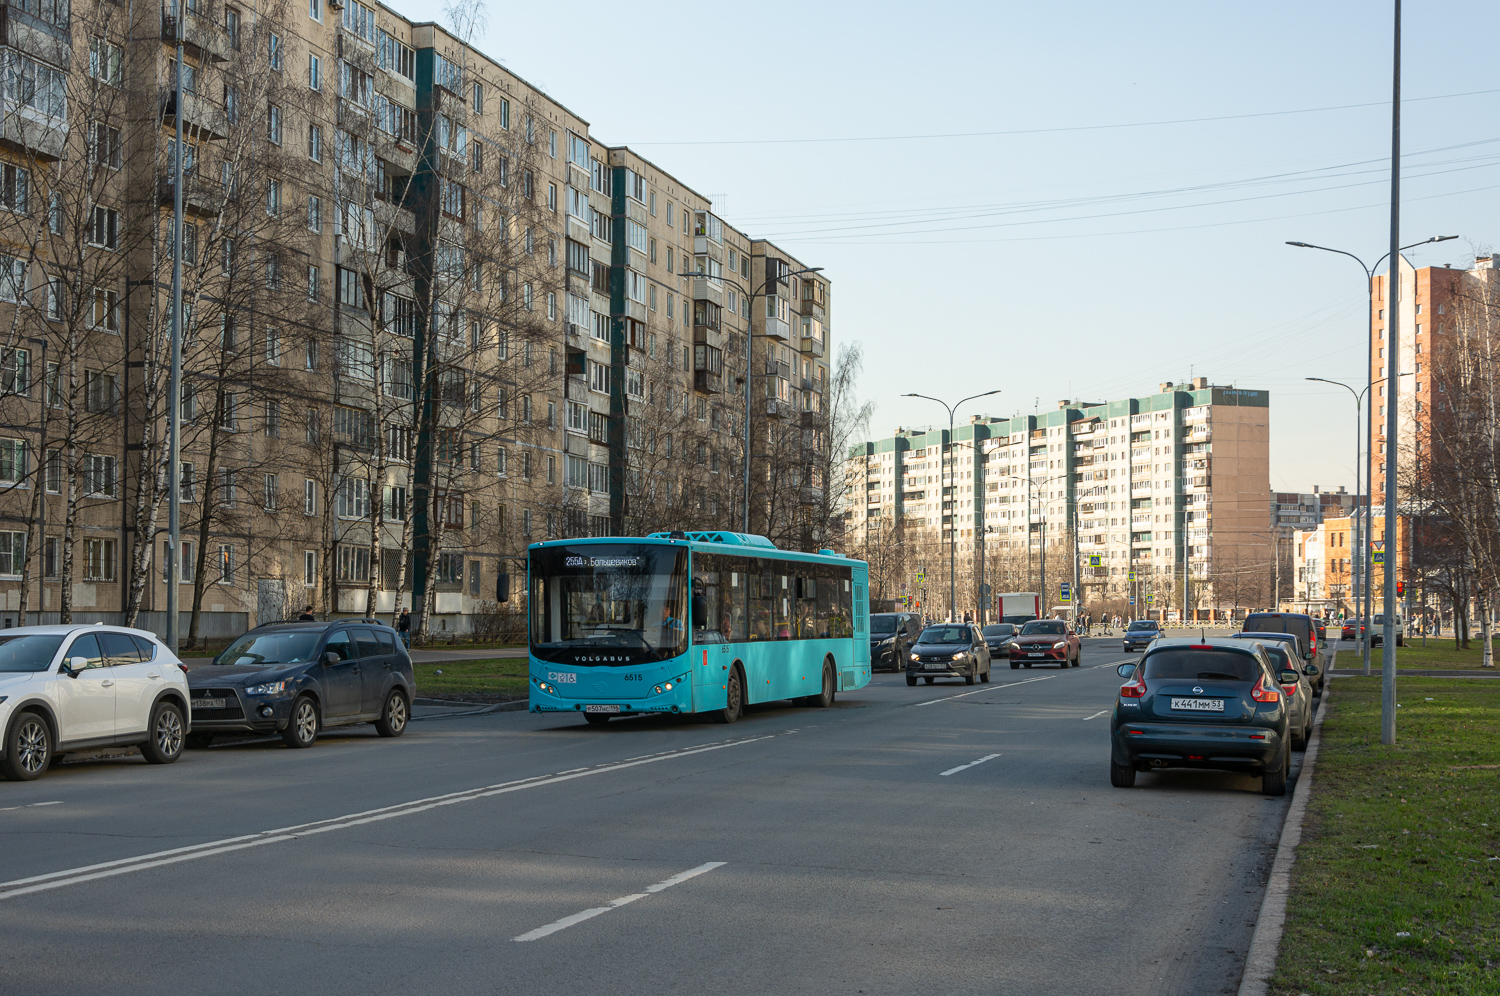 Petersburg, Volgabus-5270.G4 (LNG) # 6515